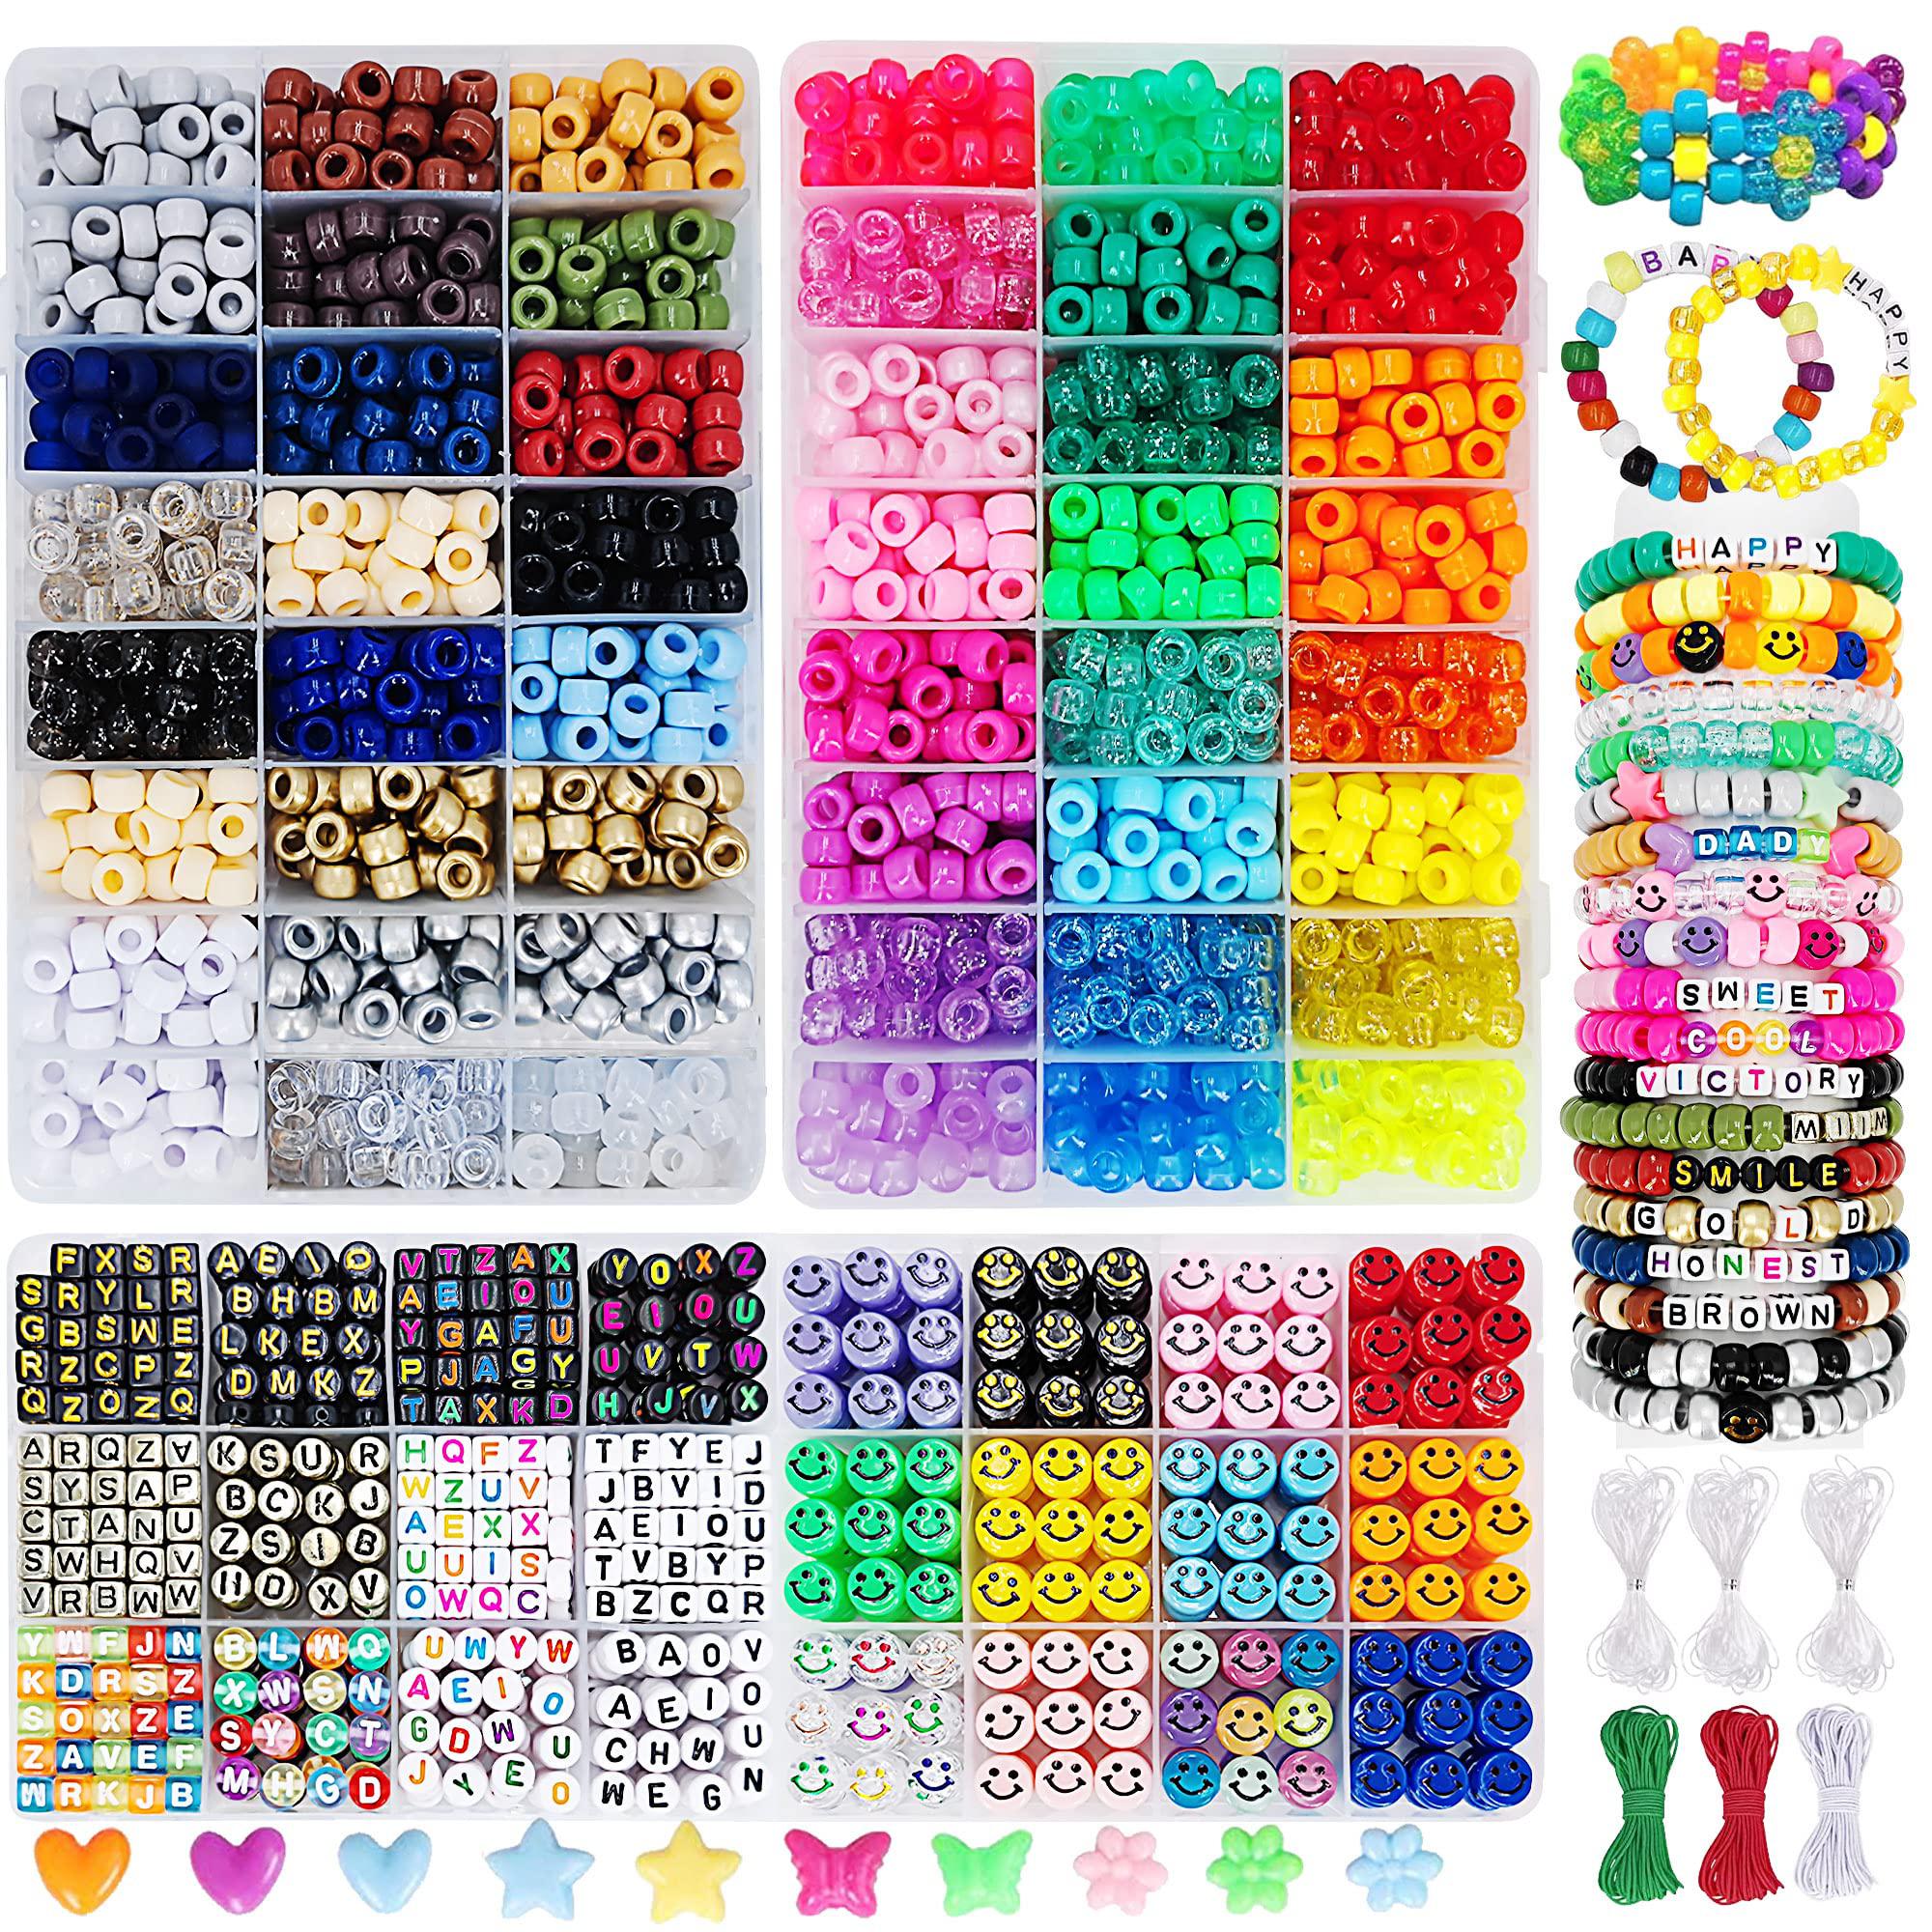 MIIIM miiim 3430pcs pony beads for bracelets making kit, 44 colors